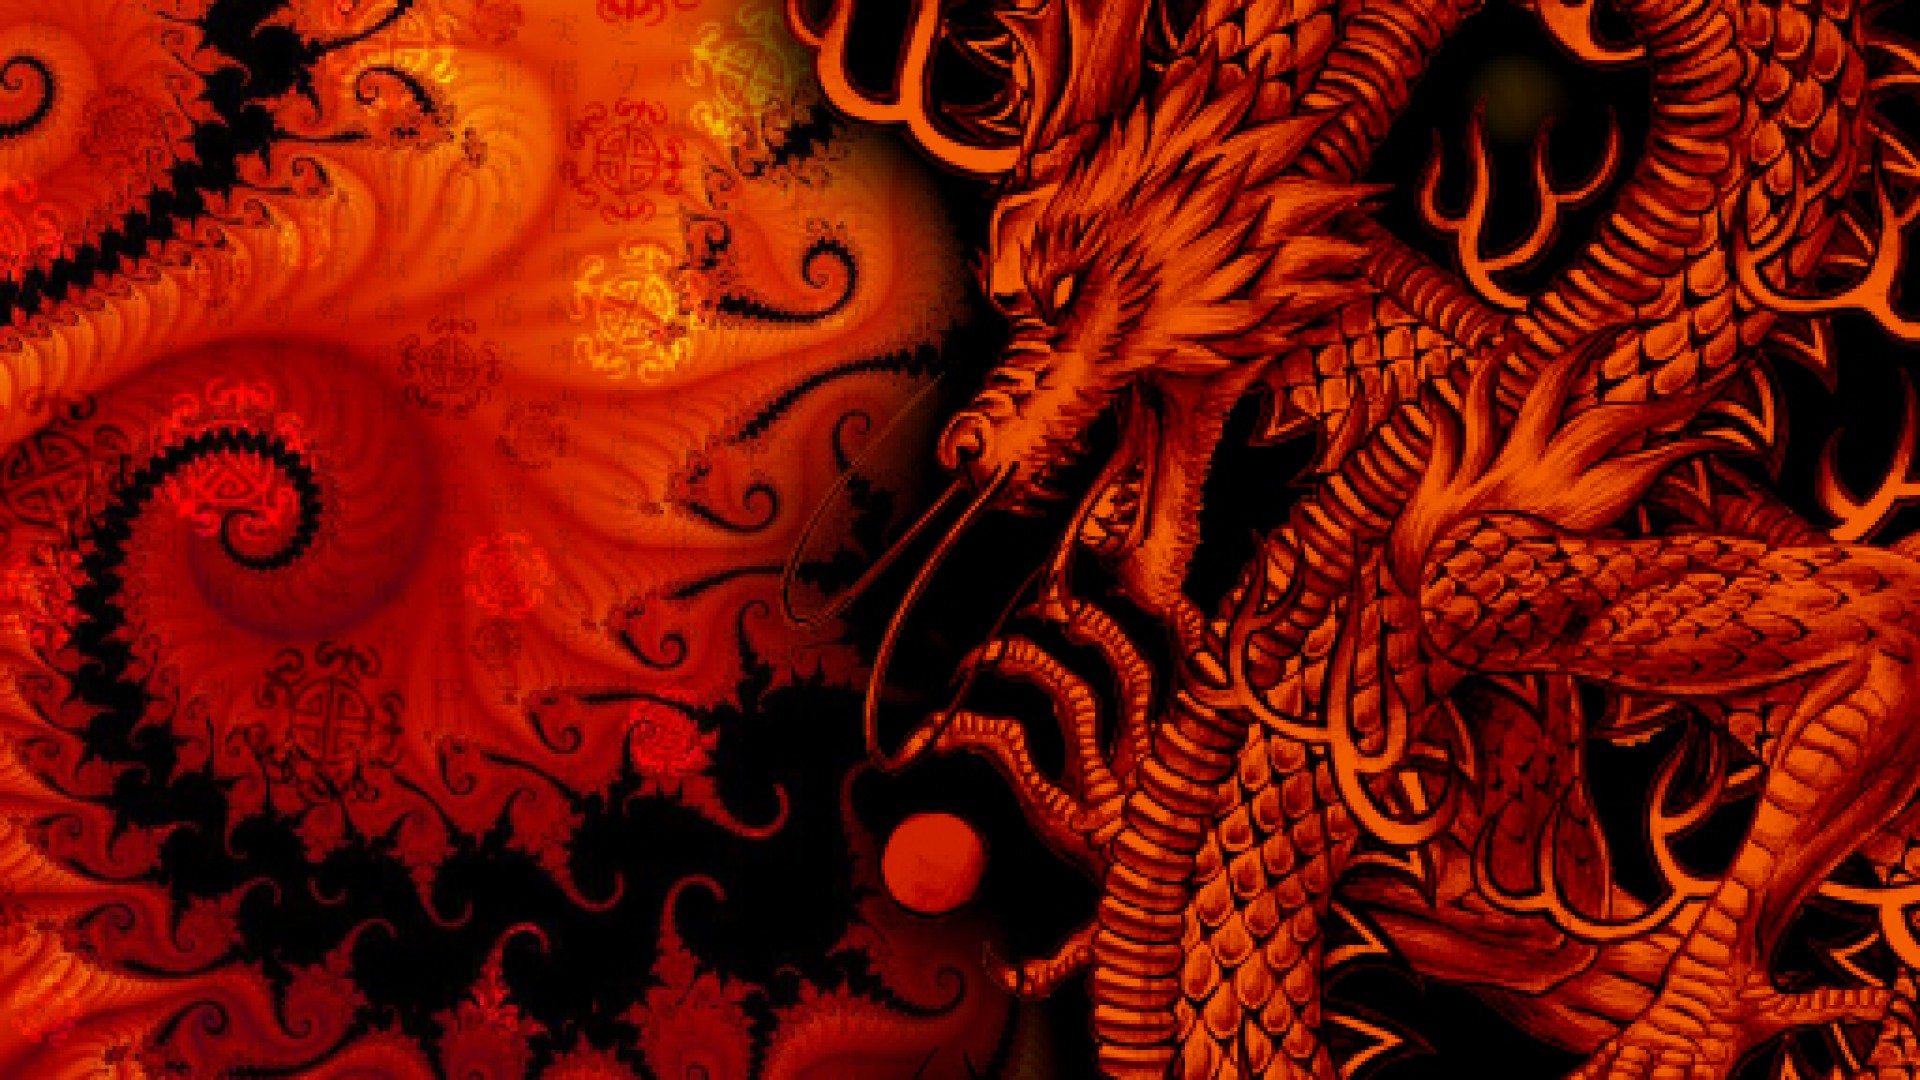 Dragon Wallpaper Images Inspiring - fullwidehd.com